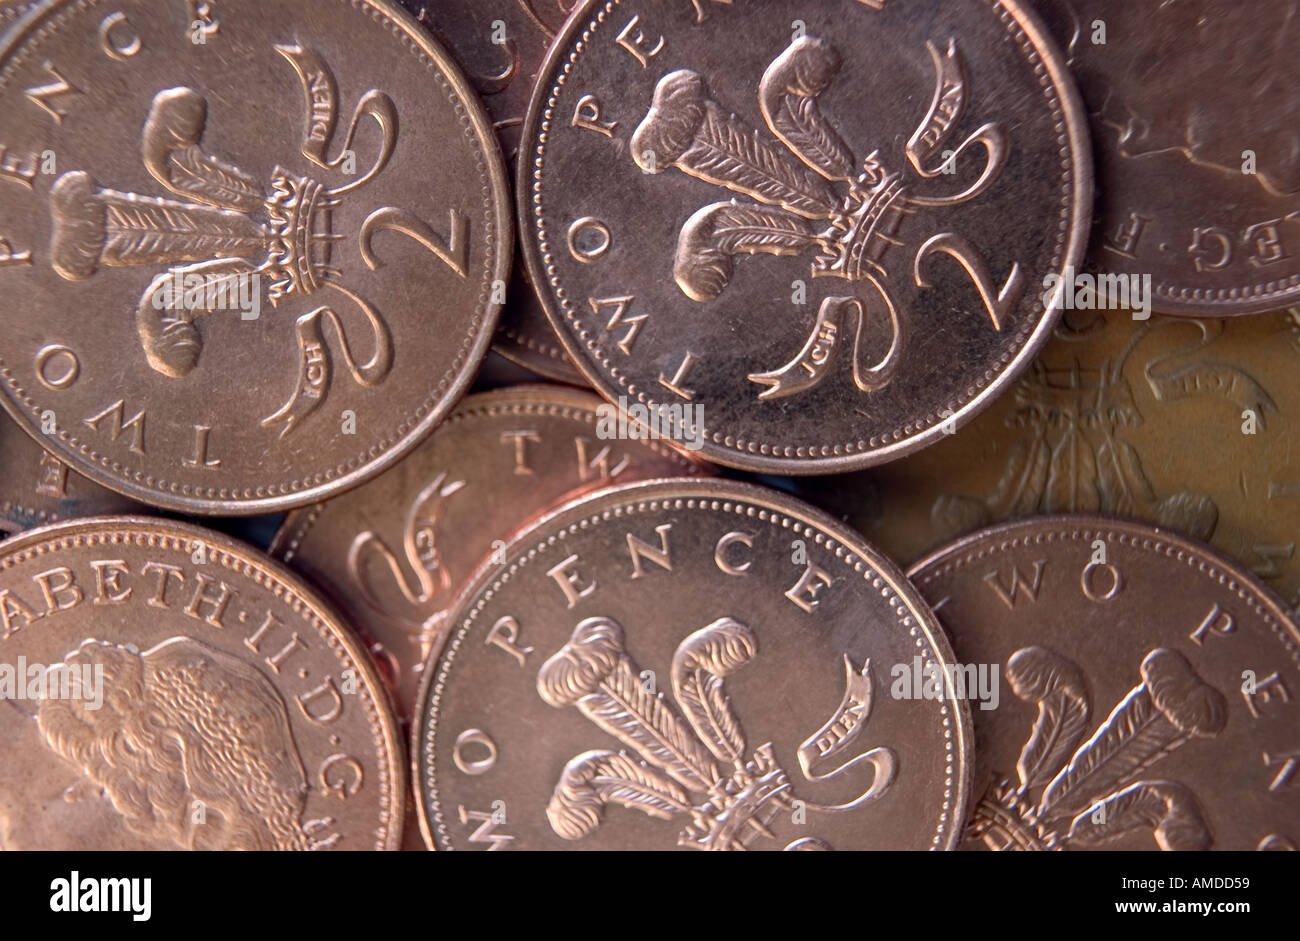 zwei Pence Münzen Nahaufnahme England UK Stockfoto